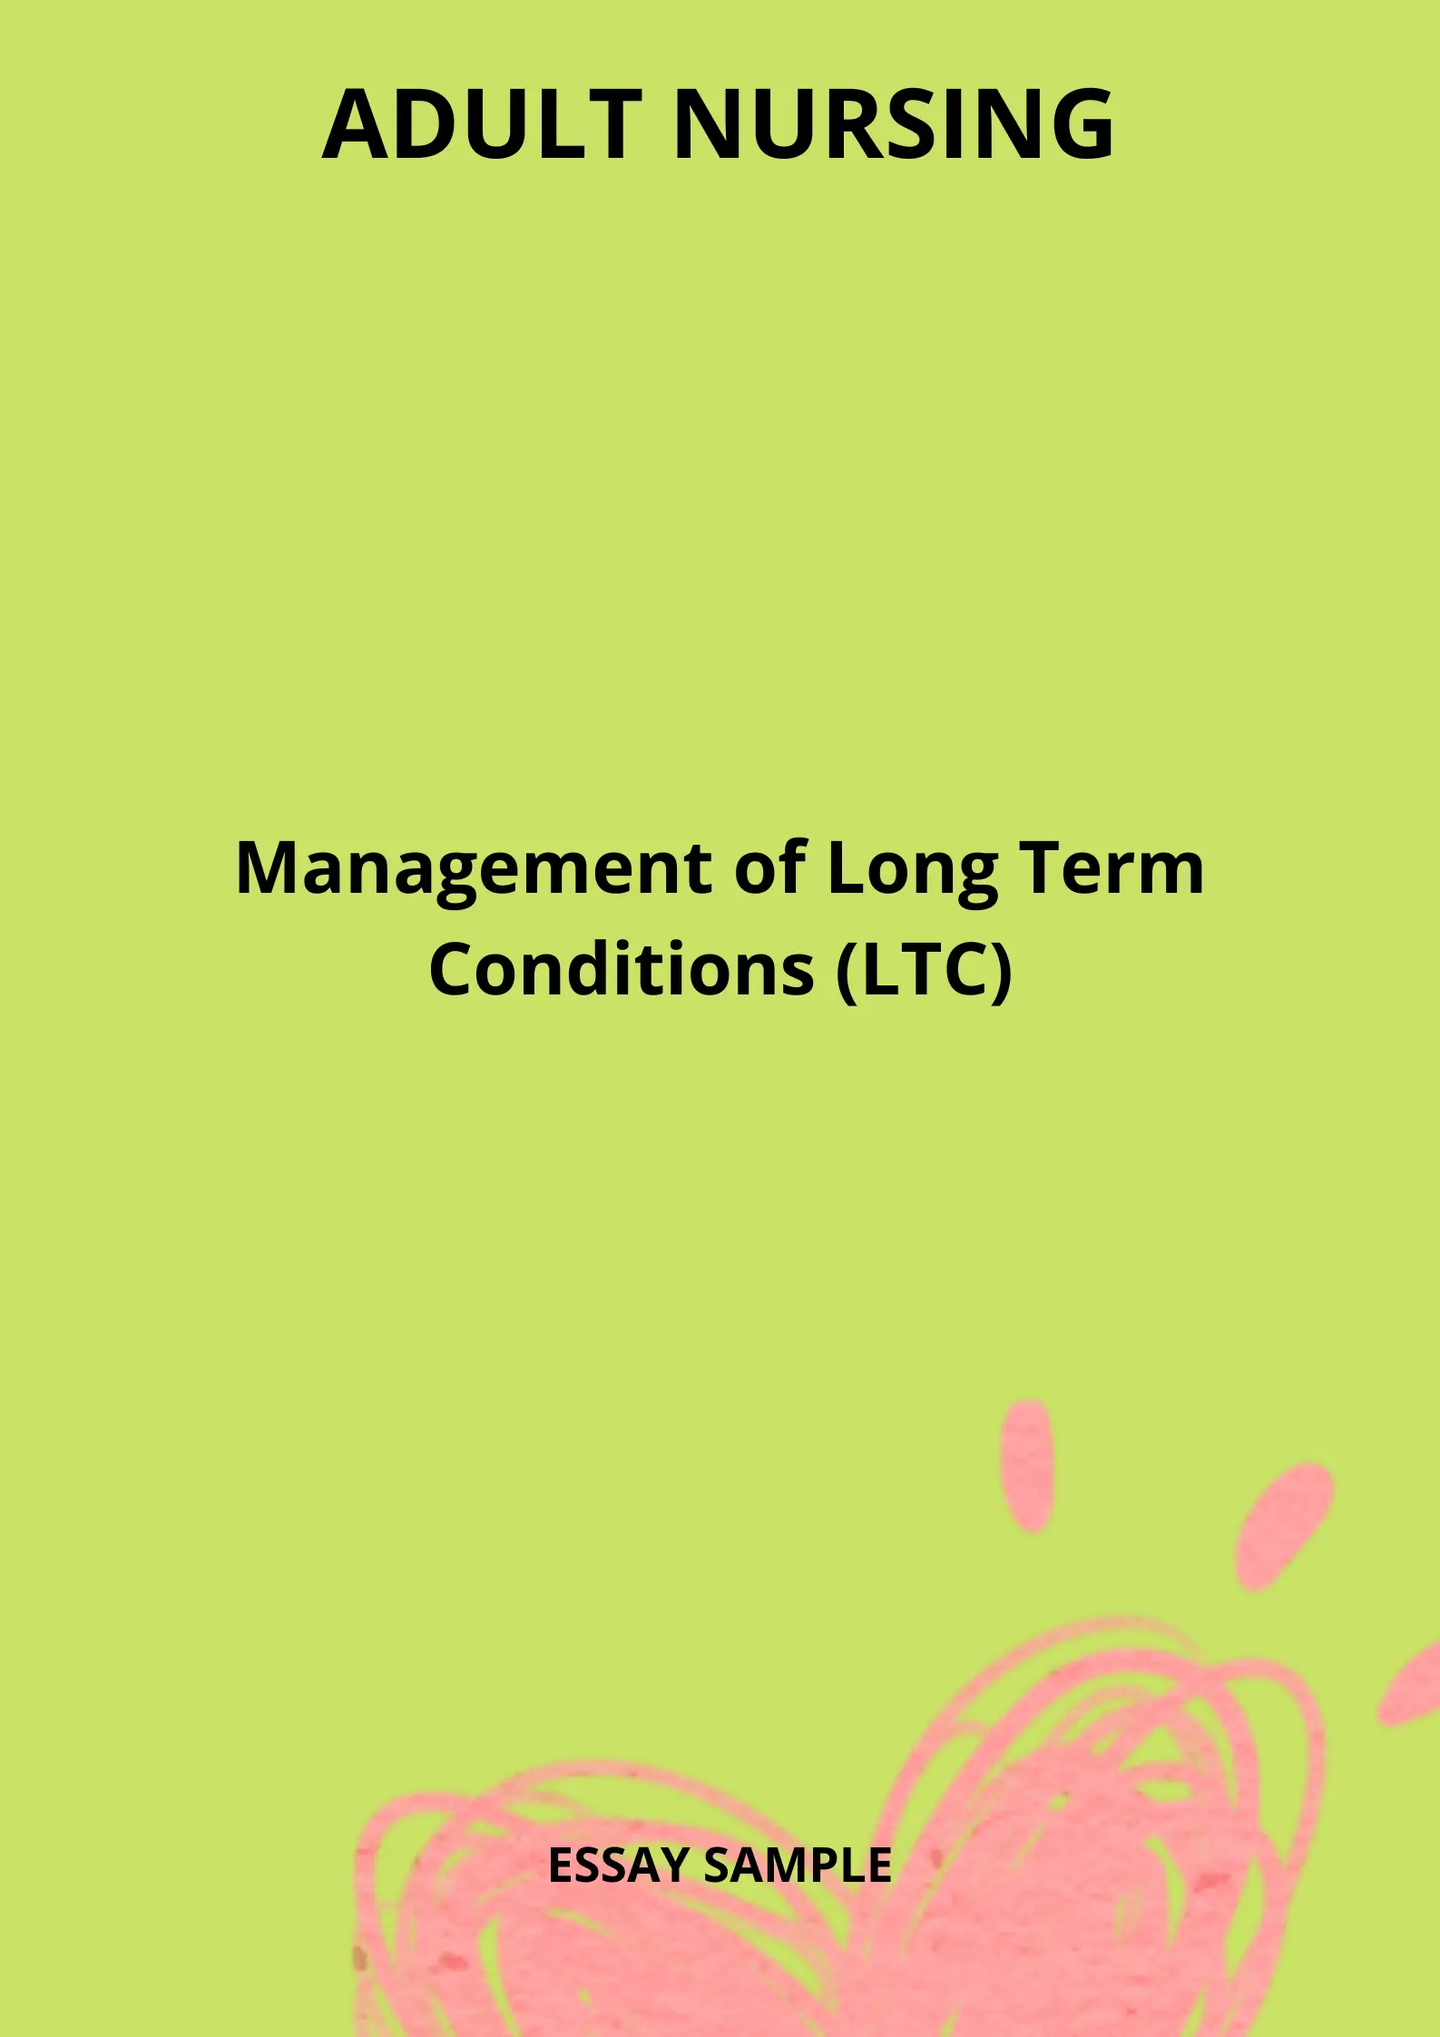 Adult Nursing- Management of Long Term Conditions Essay Sample